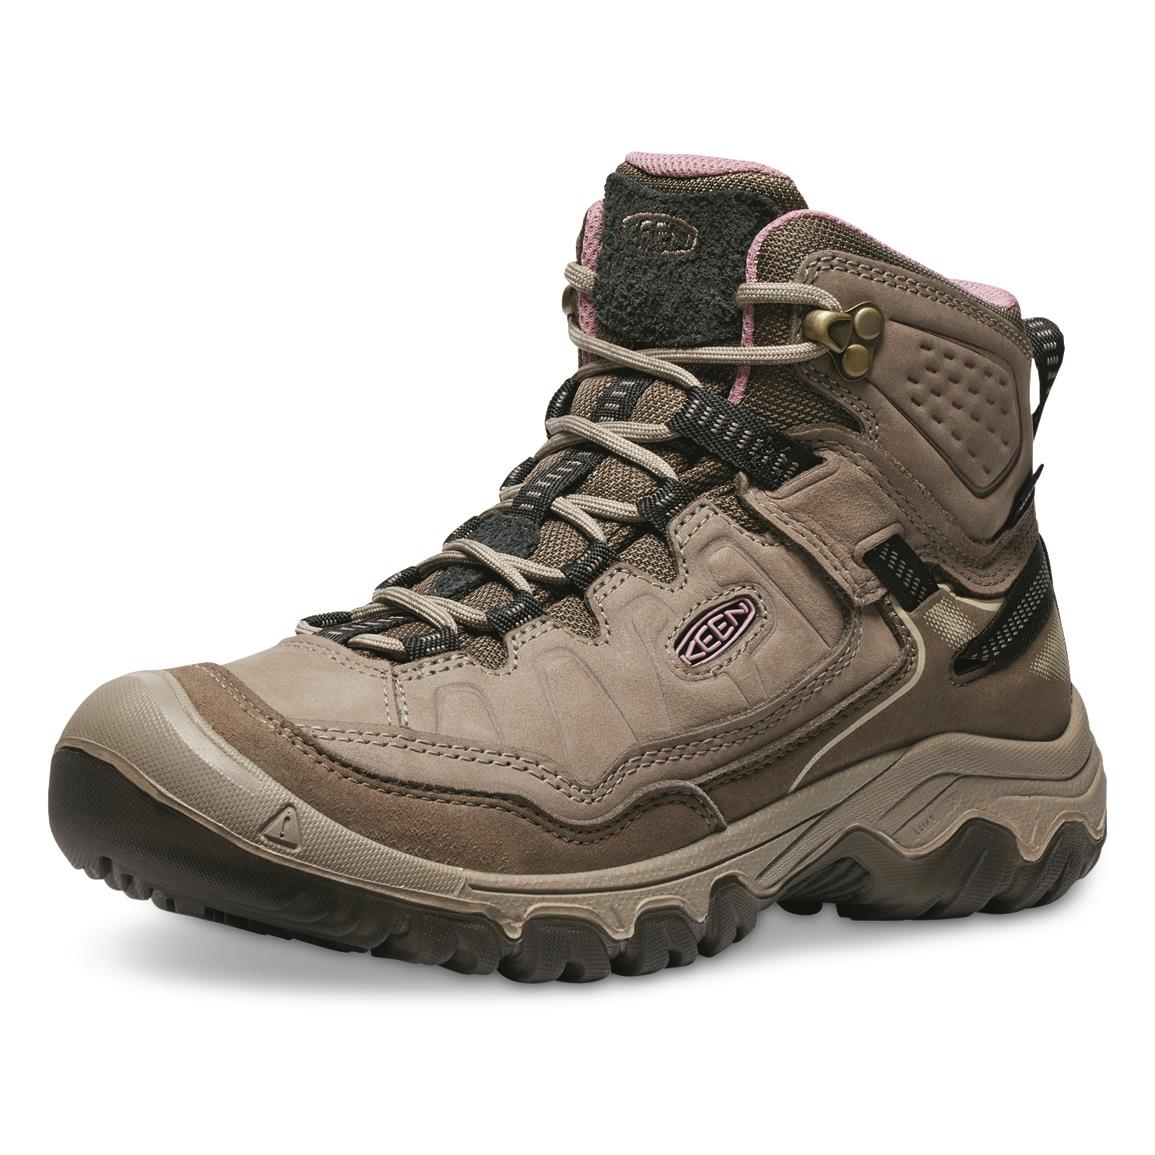 KEEN Women's Targhee IV Mid Waterproof Hiking Boots, Brindle/nostalgia Rose